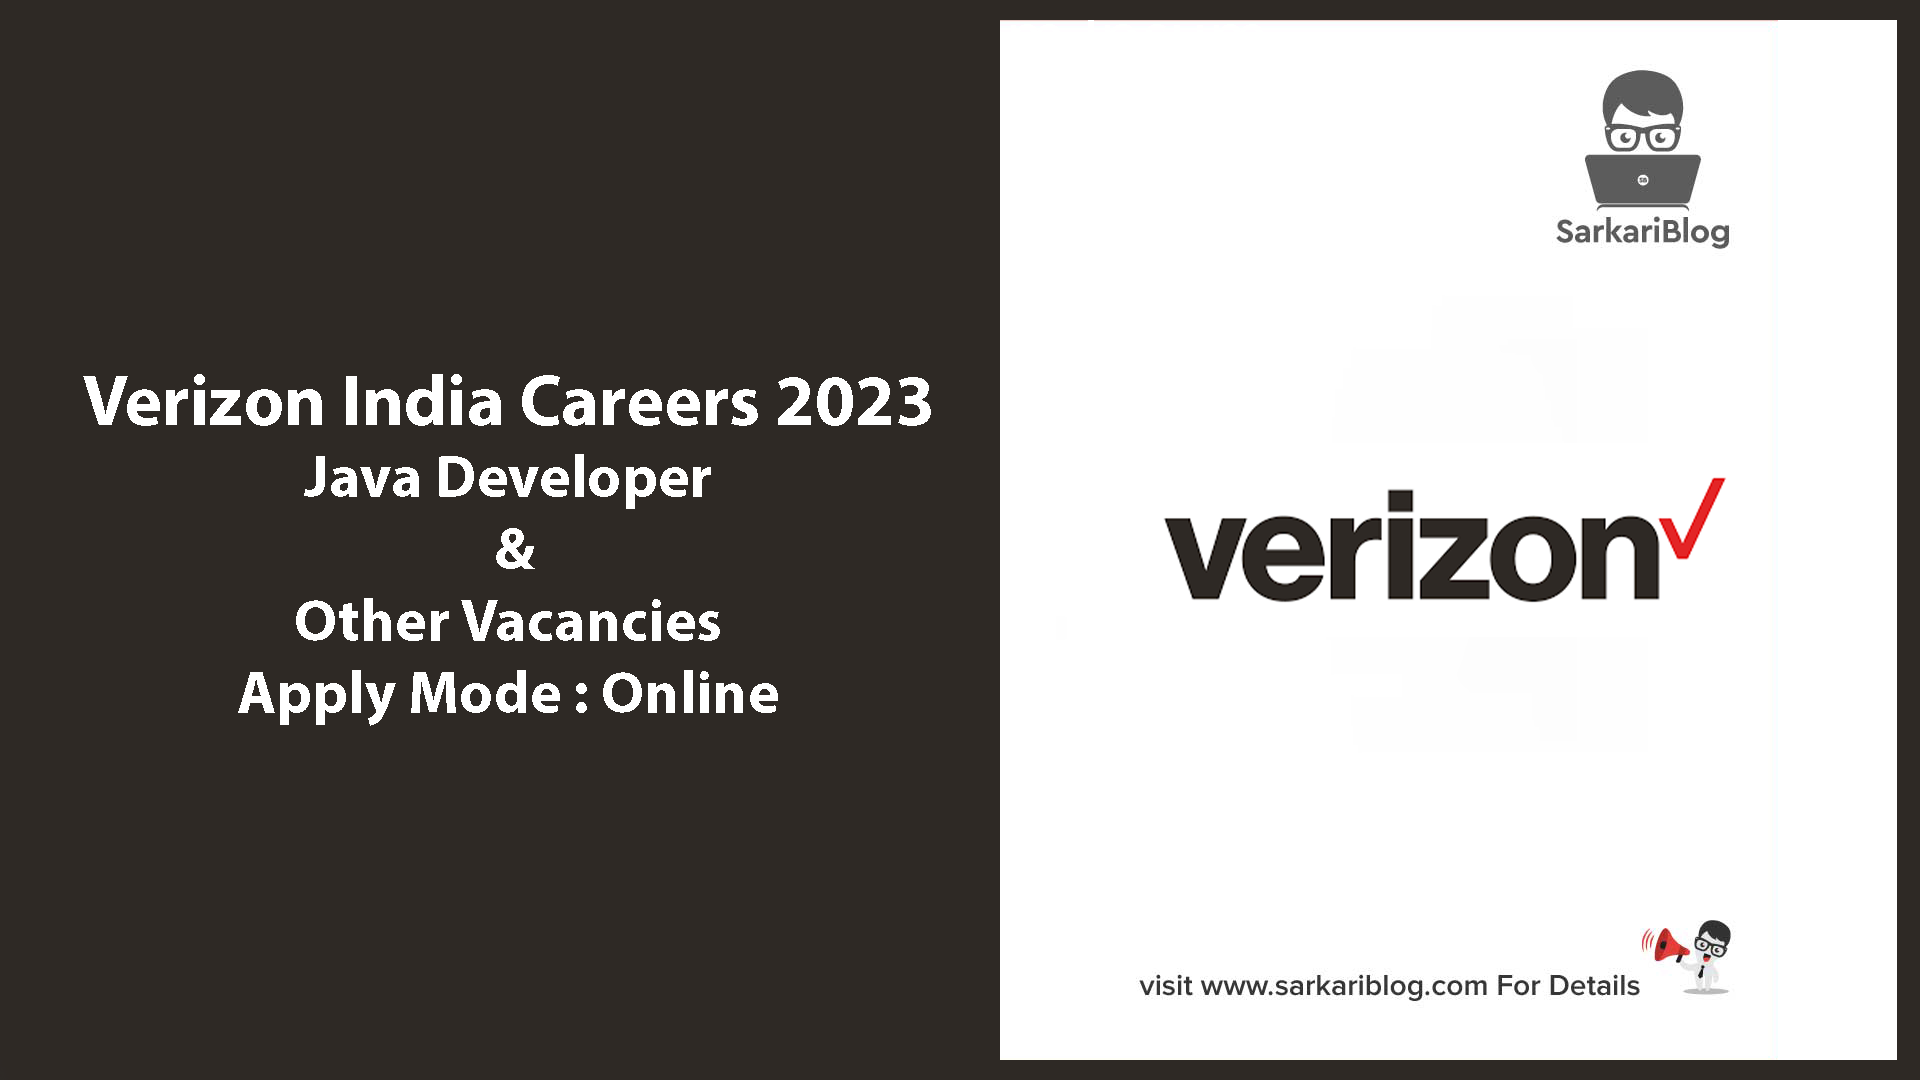 Verizon India Careers 2023